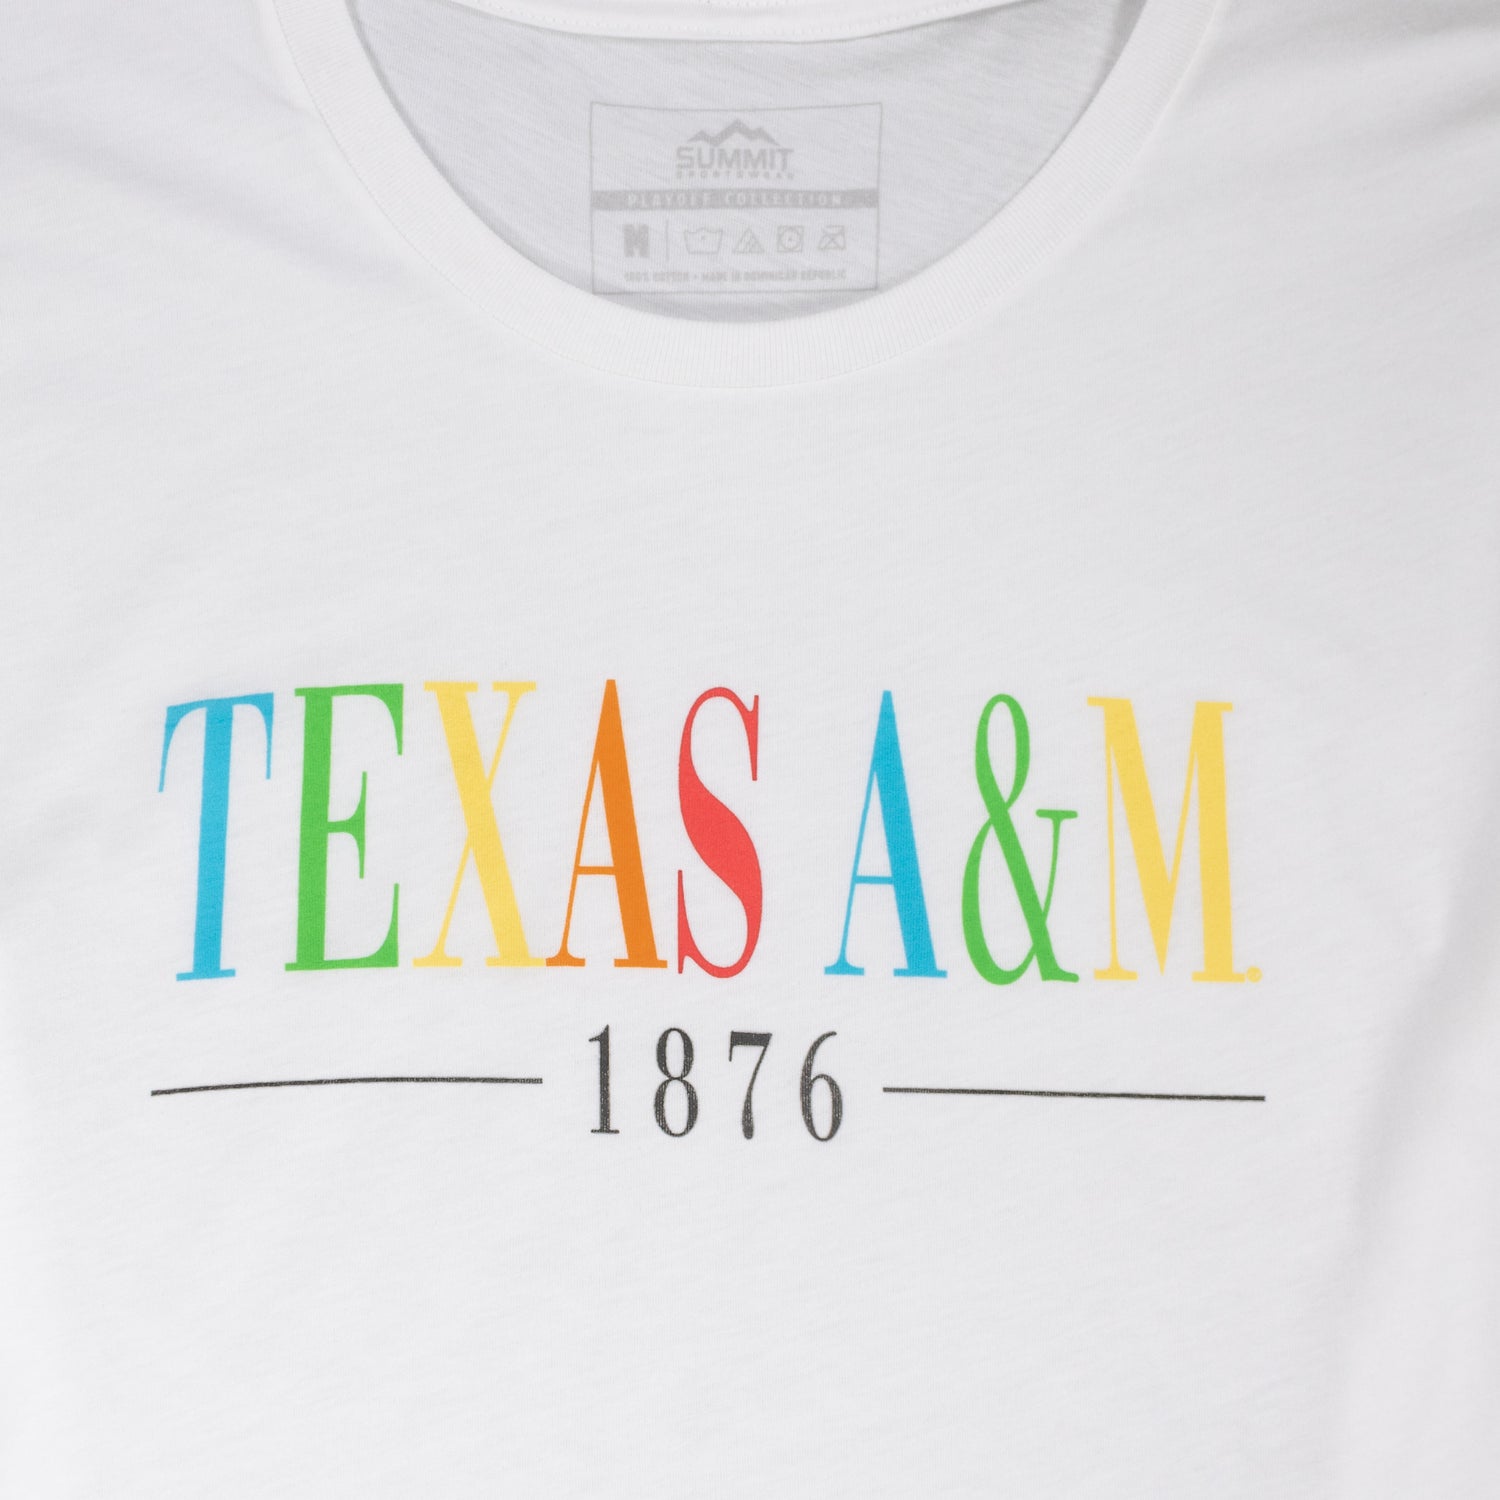 Texas A&M 1876 Rainbow Crop Top